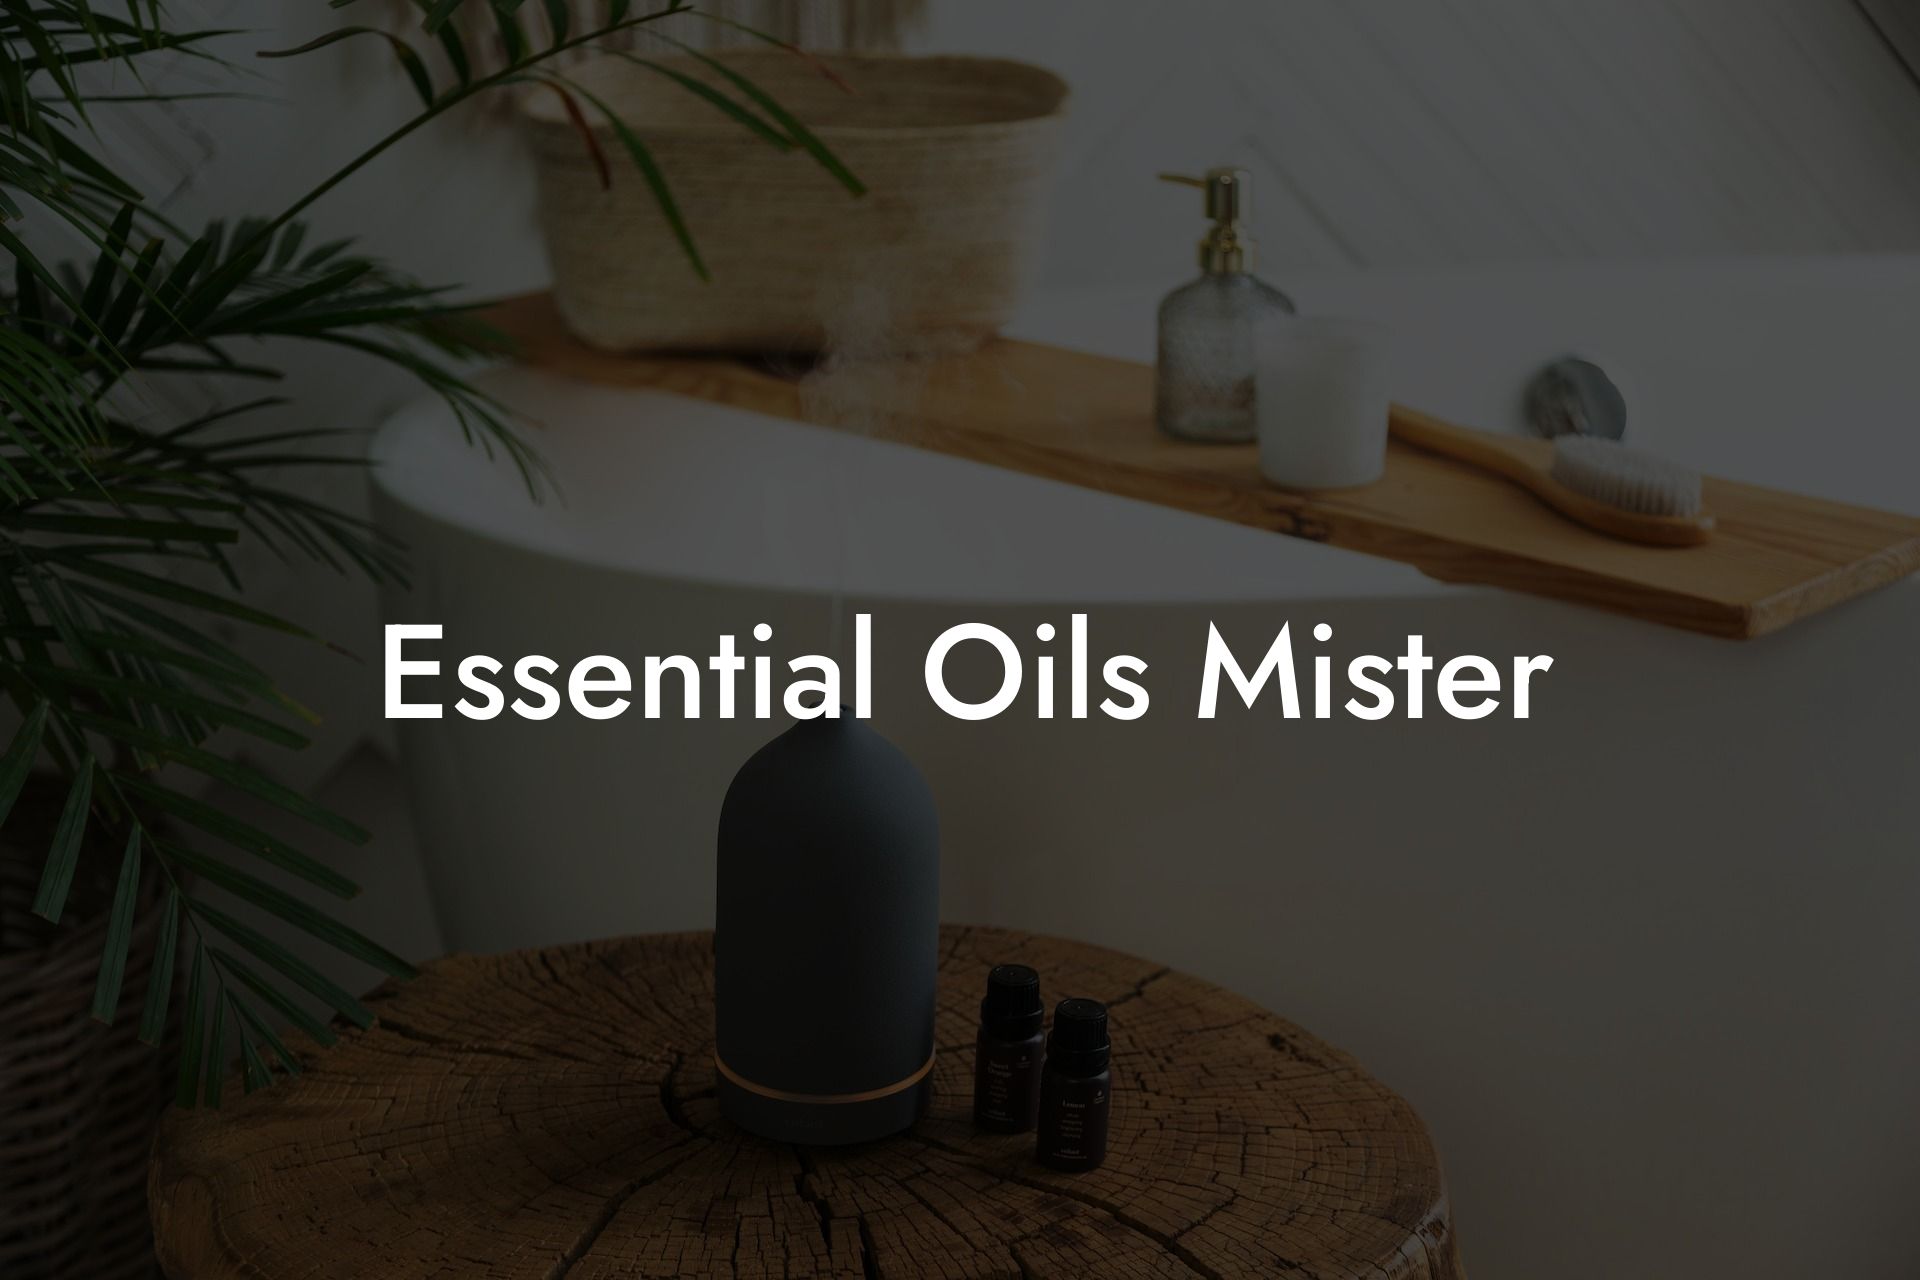 Essential Oils Mister